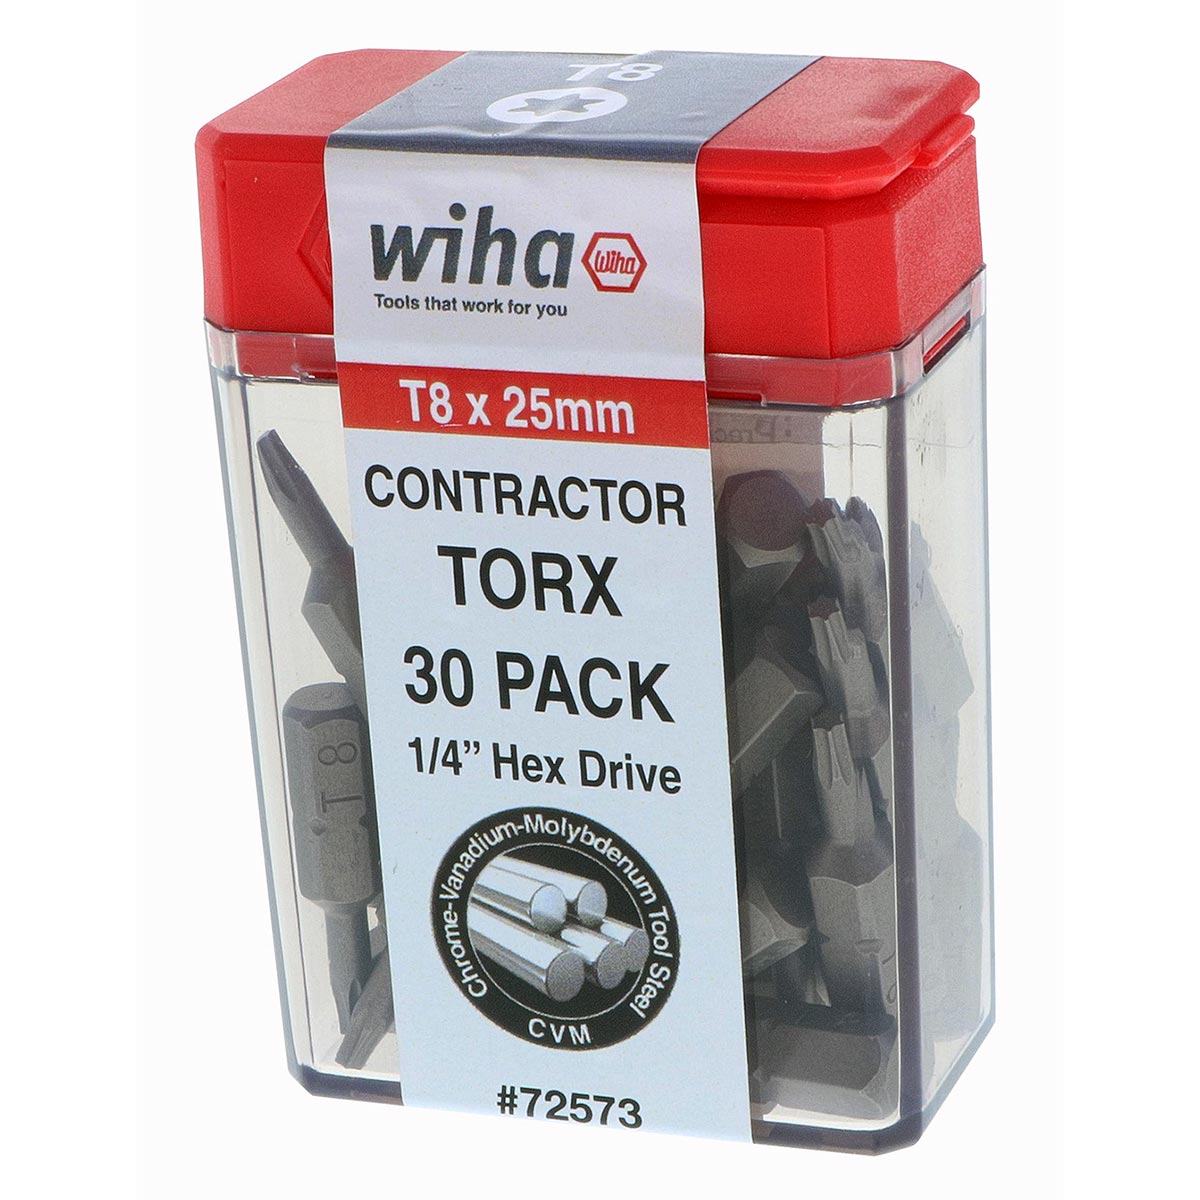 Wiha Torx Contractor Grade Insert Bit T8 x 25mm - 30 Pack